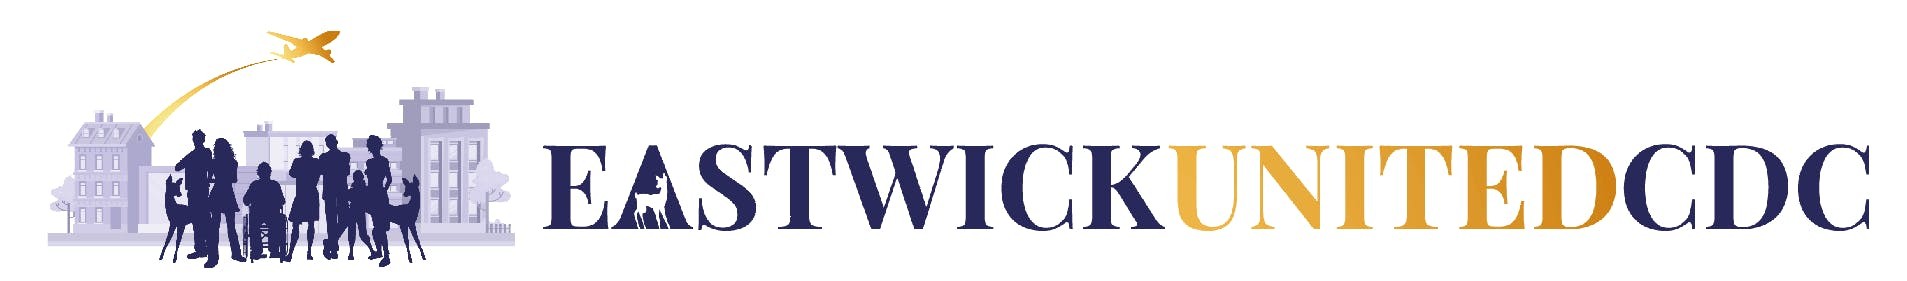 Eastwick United Logo